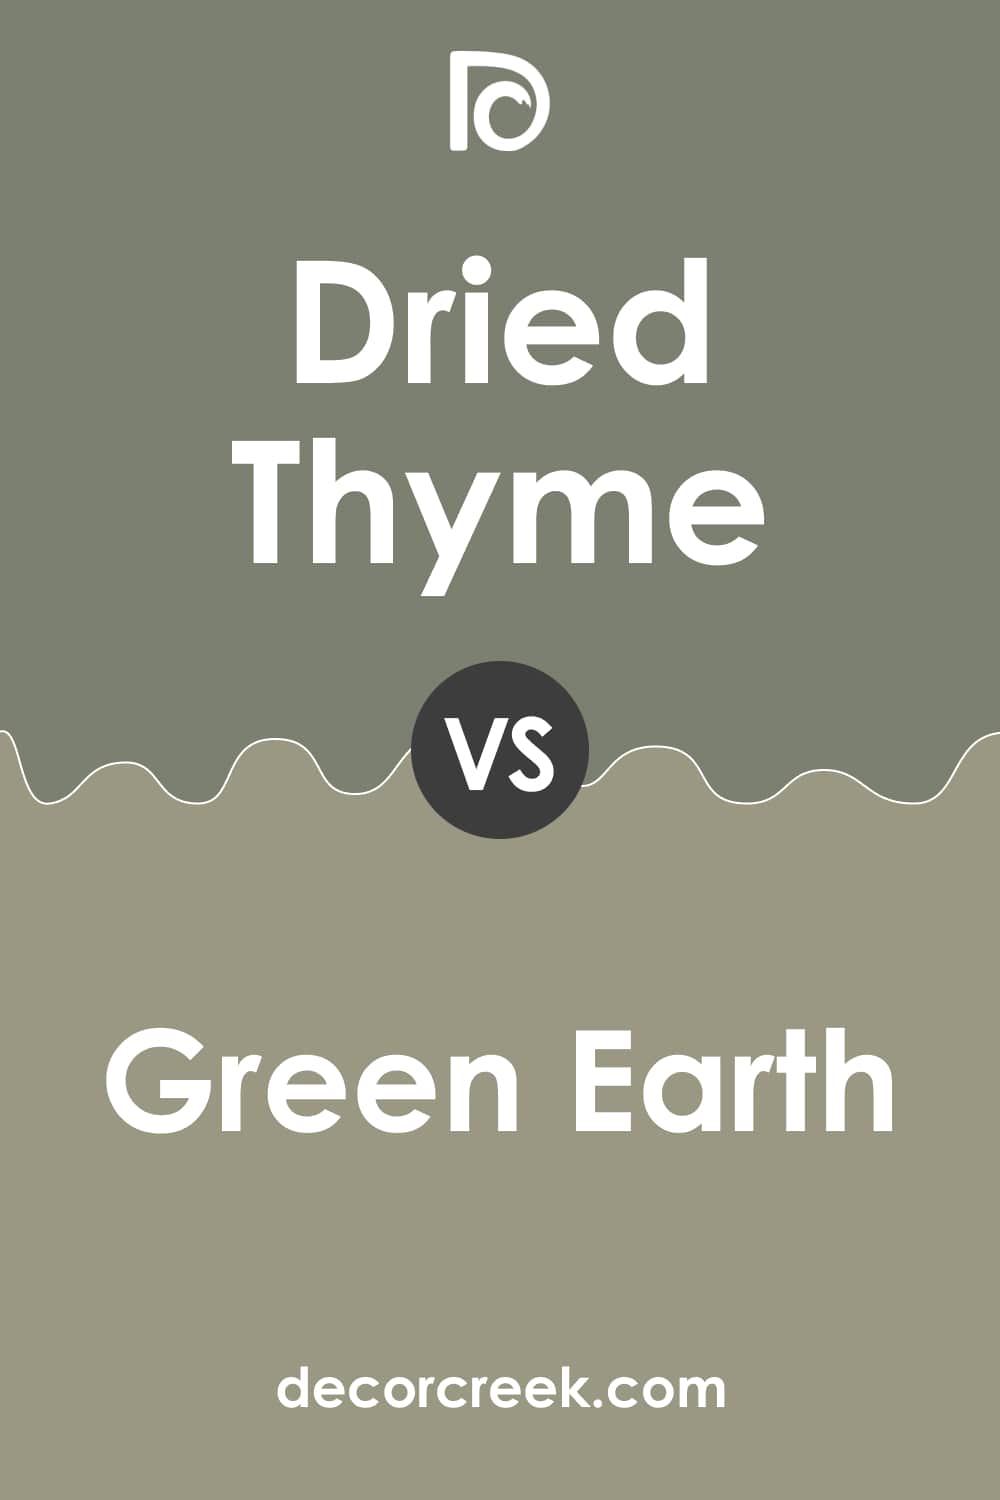 Dried Thyme vs Green Earth